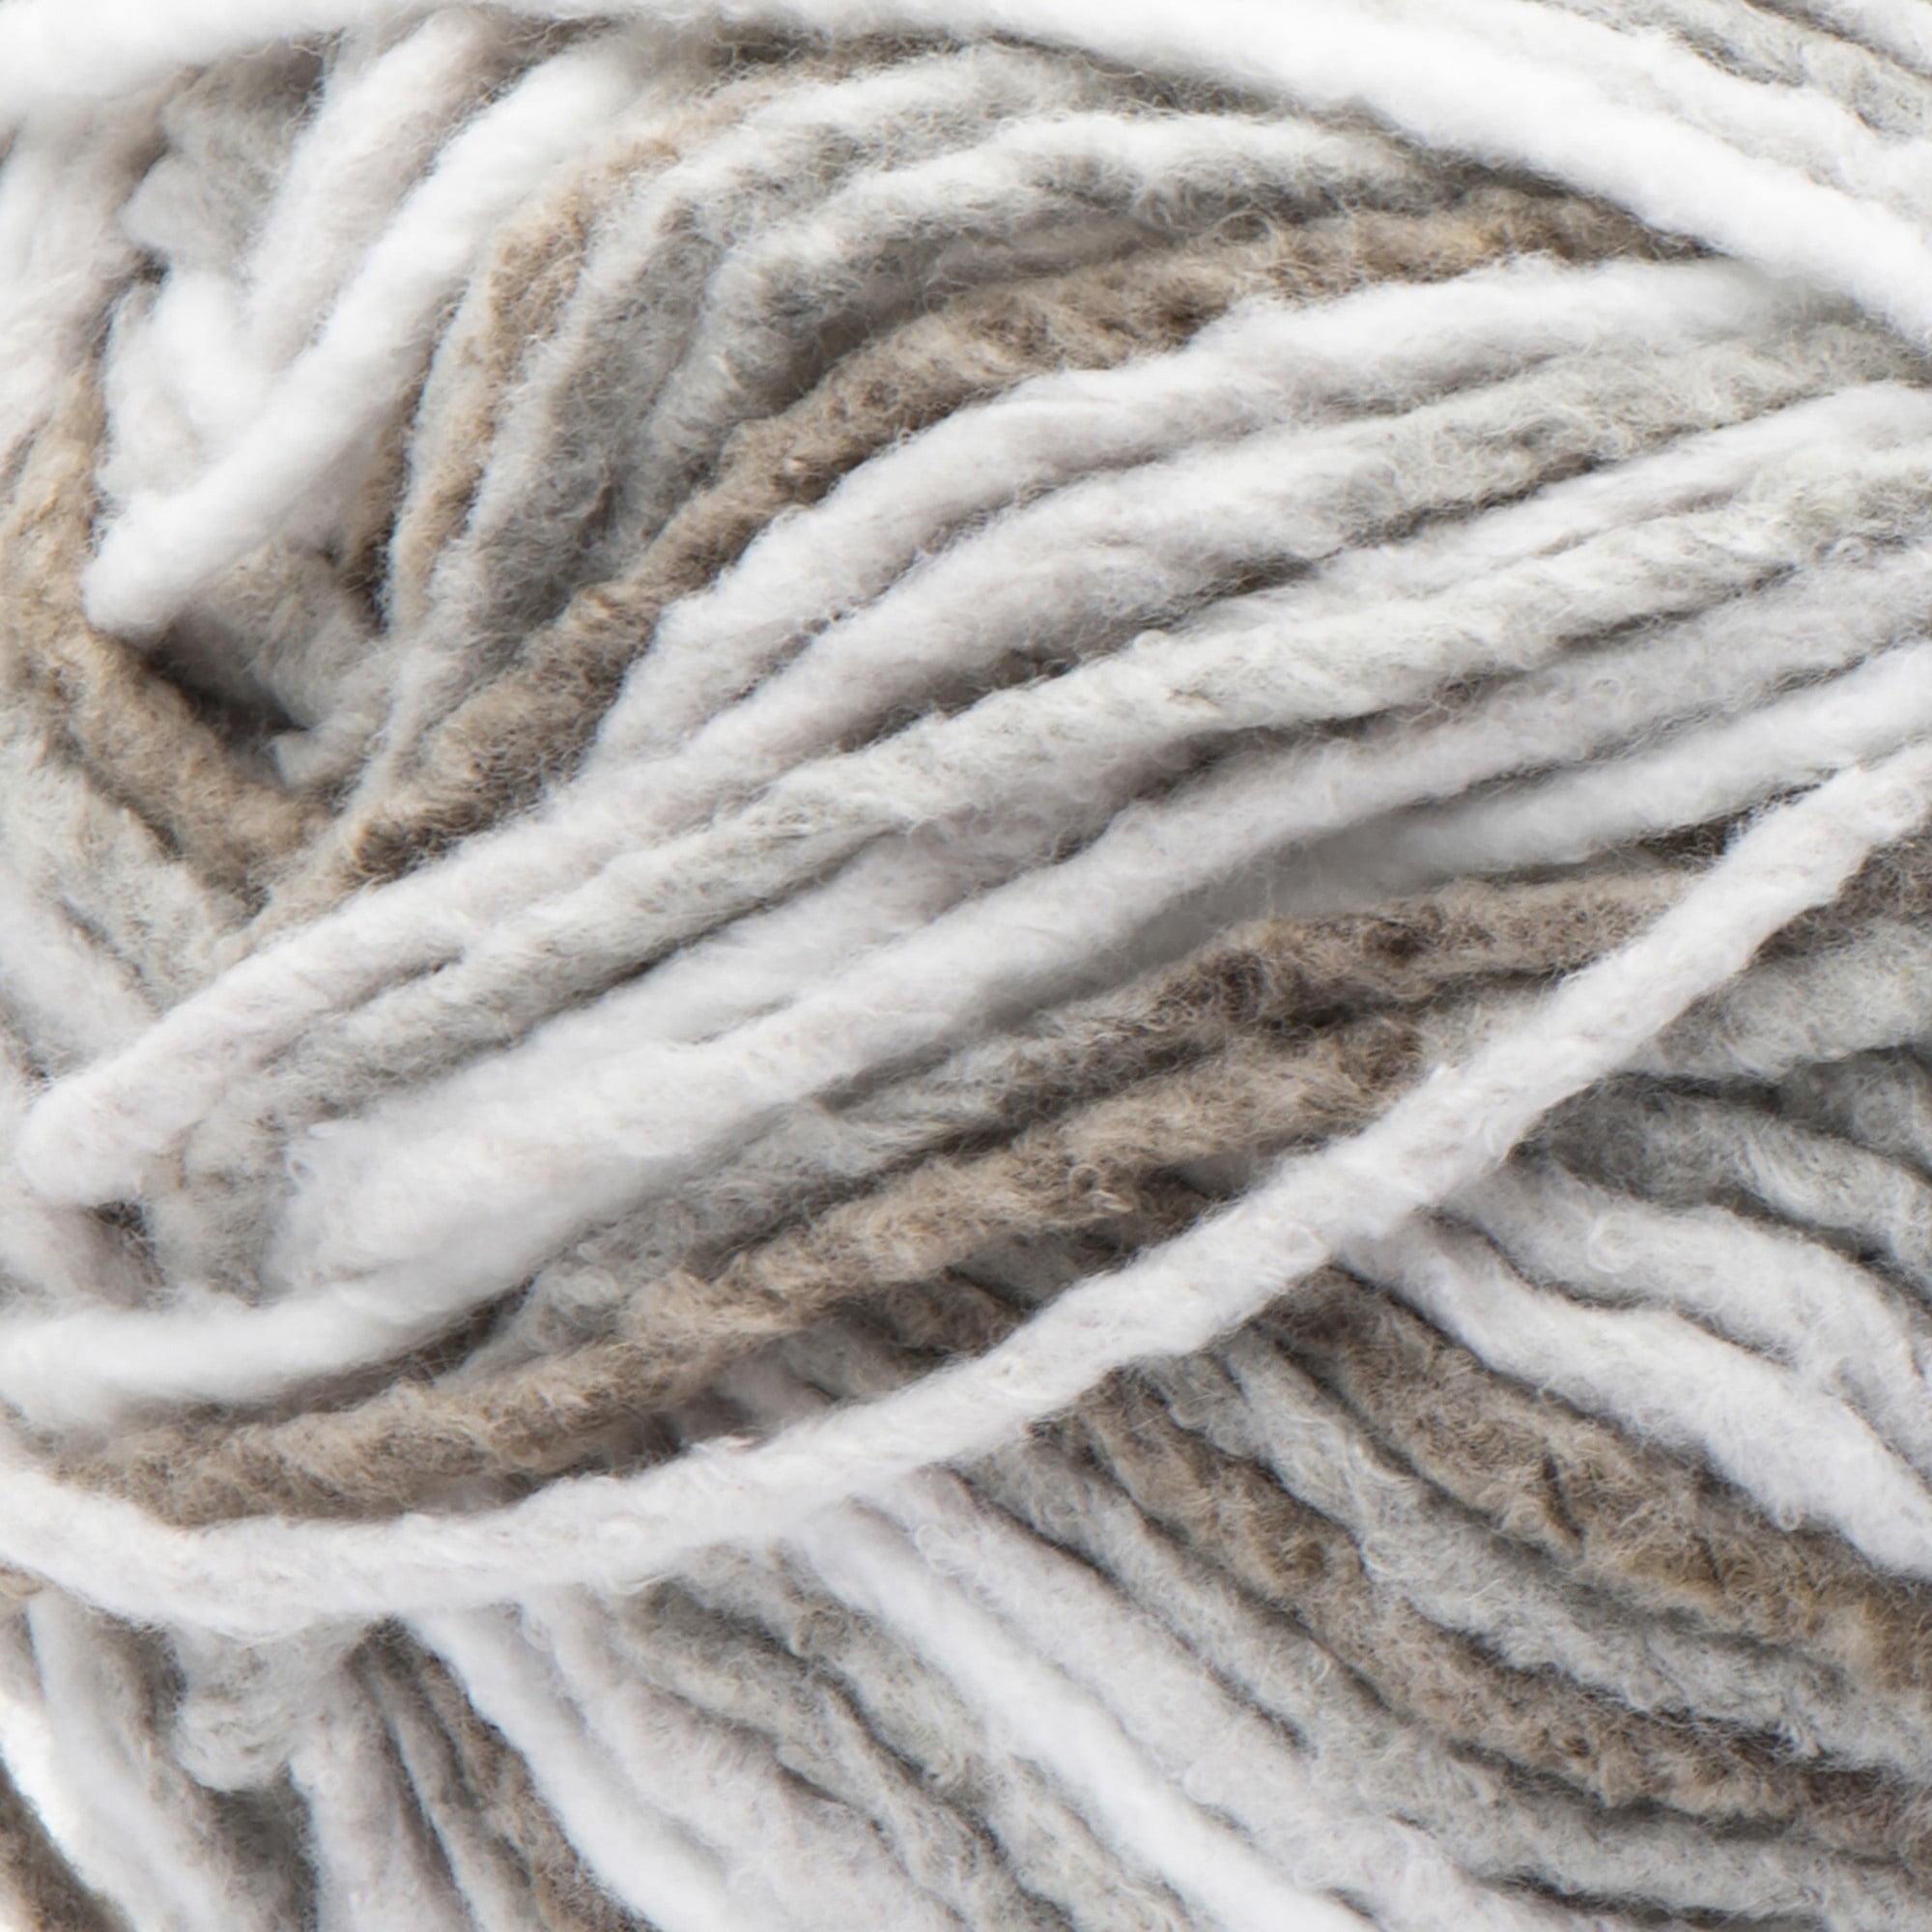 Hooking with yarn - HOTH used Bernat Forever Fleece in Rain